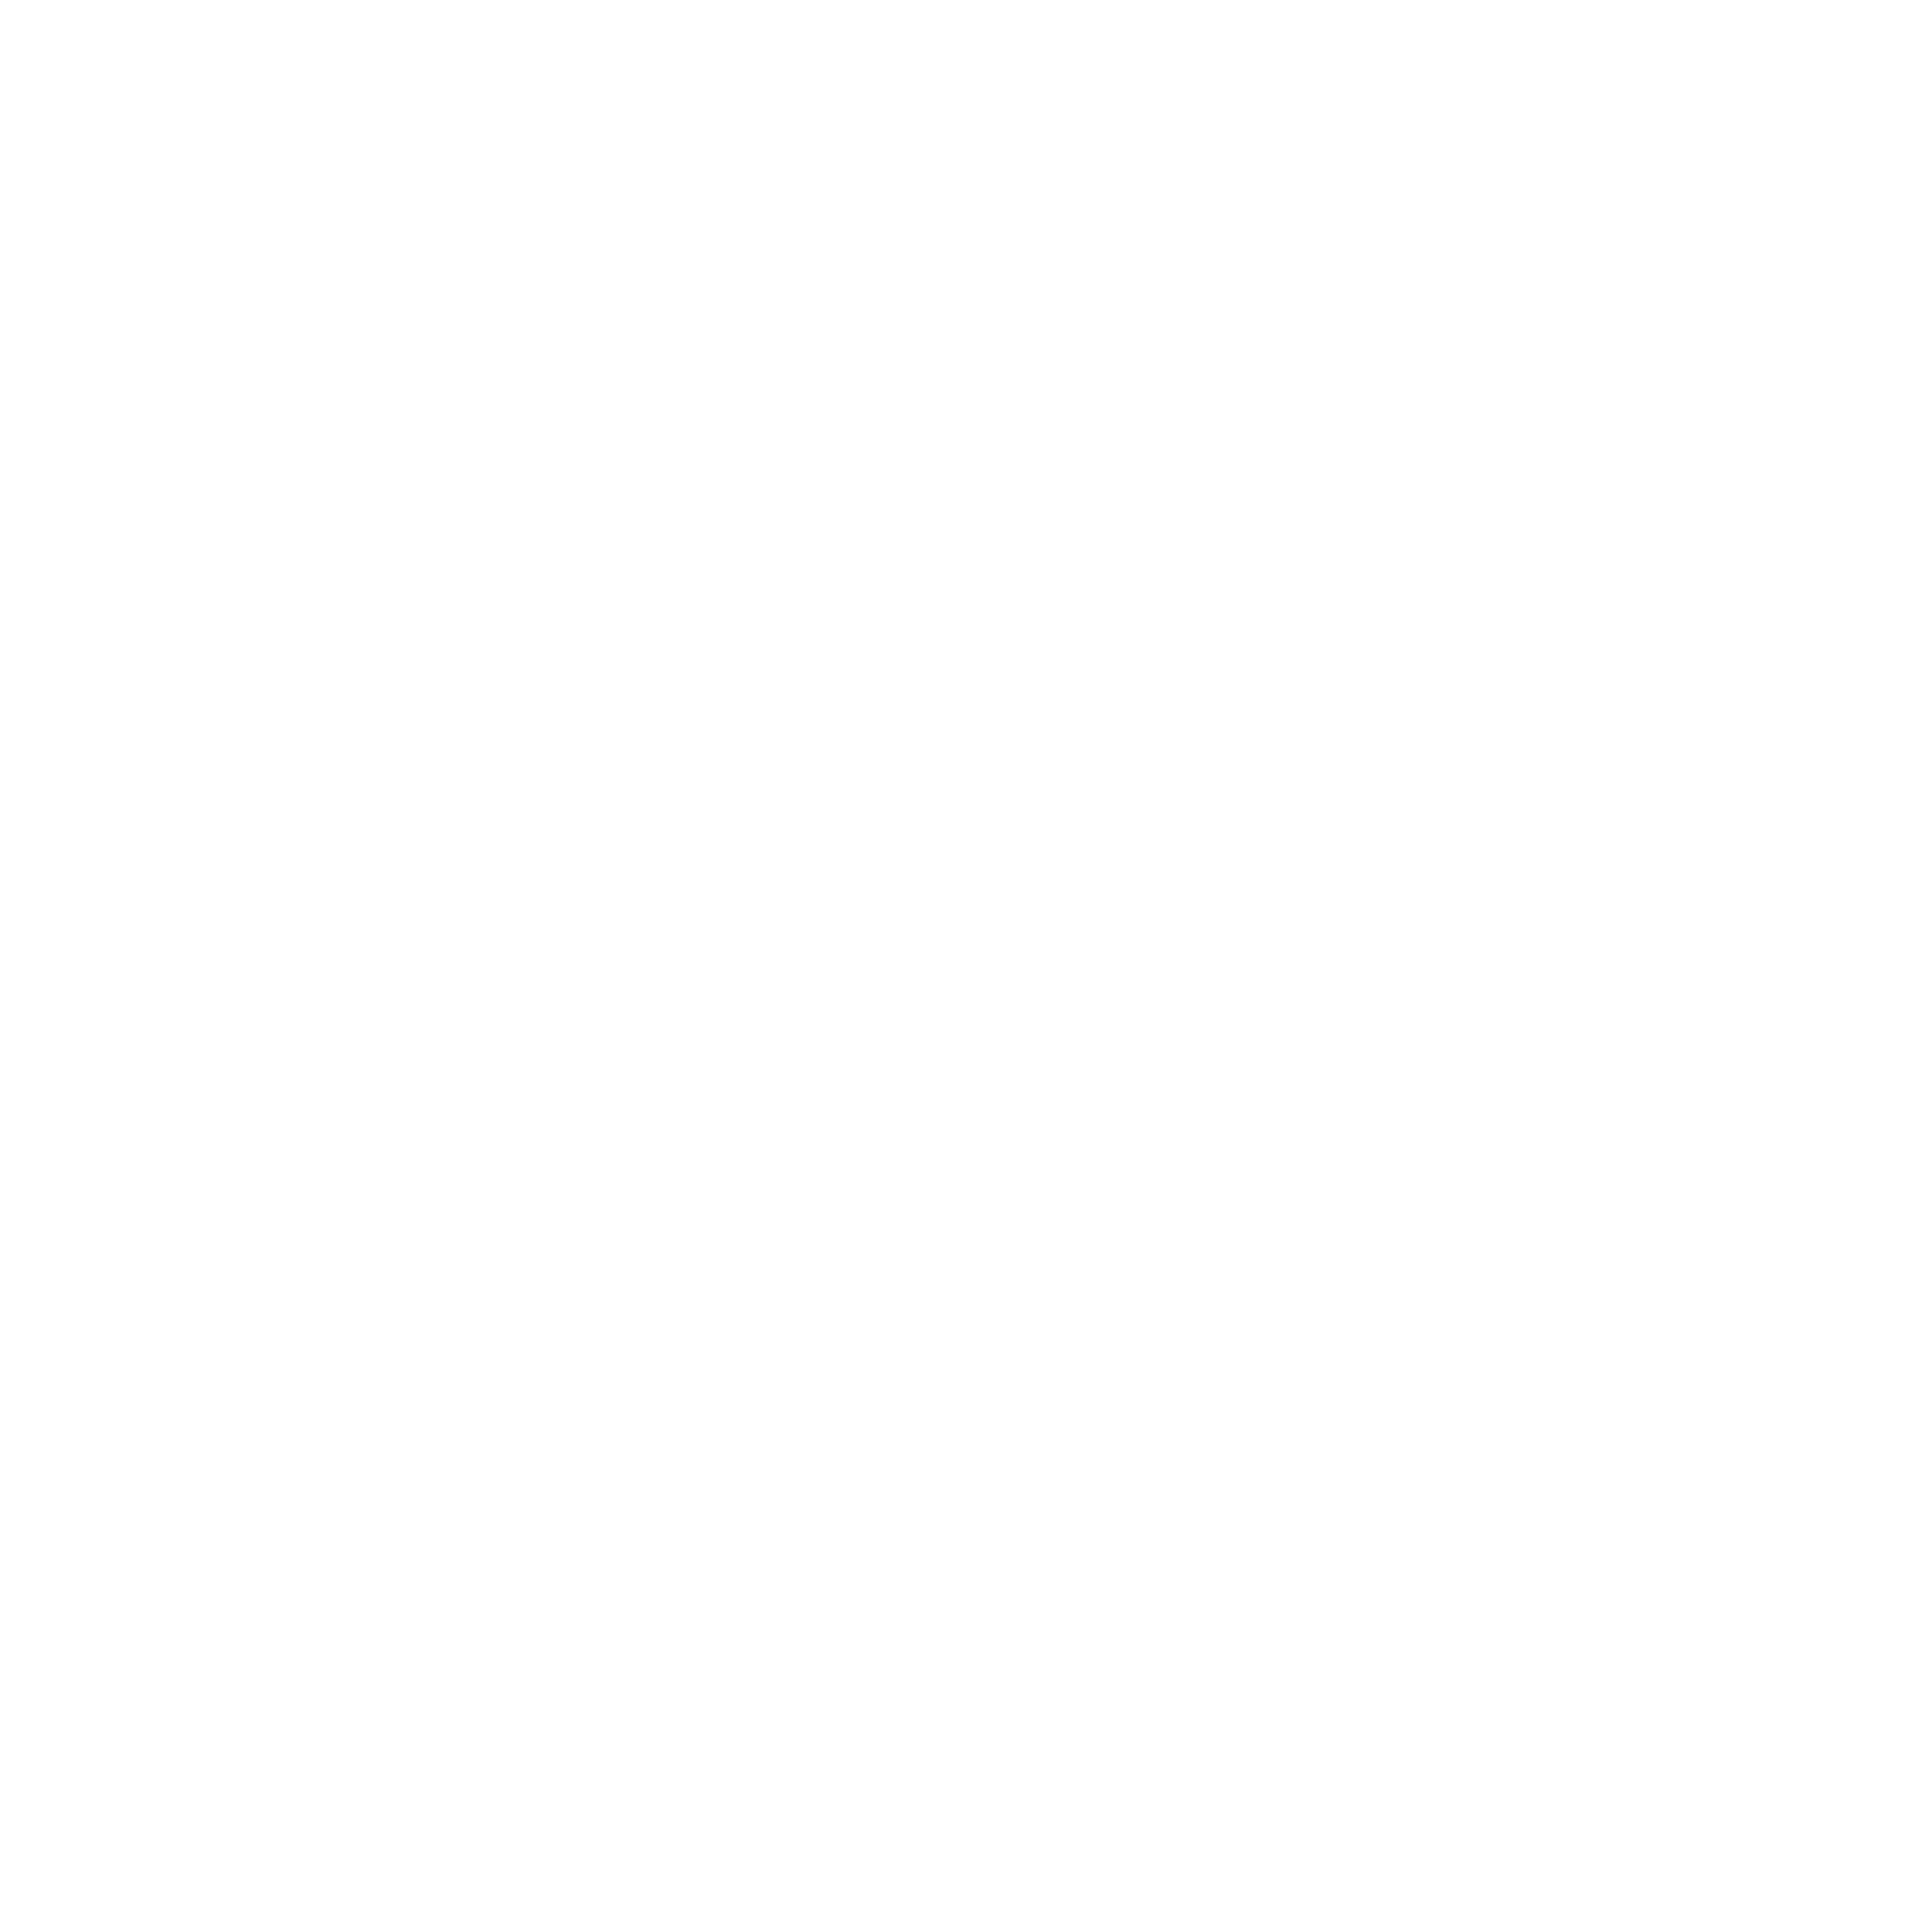 THE ADONIS CLASSIC 2023